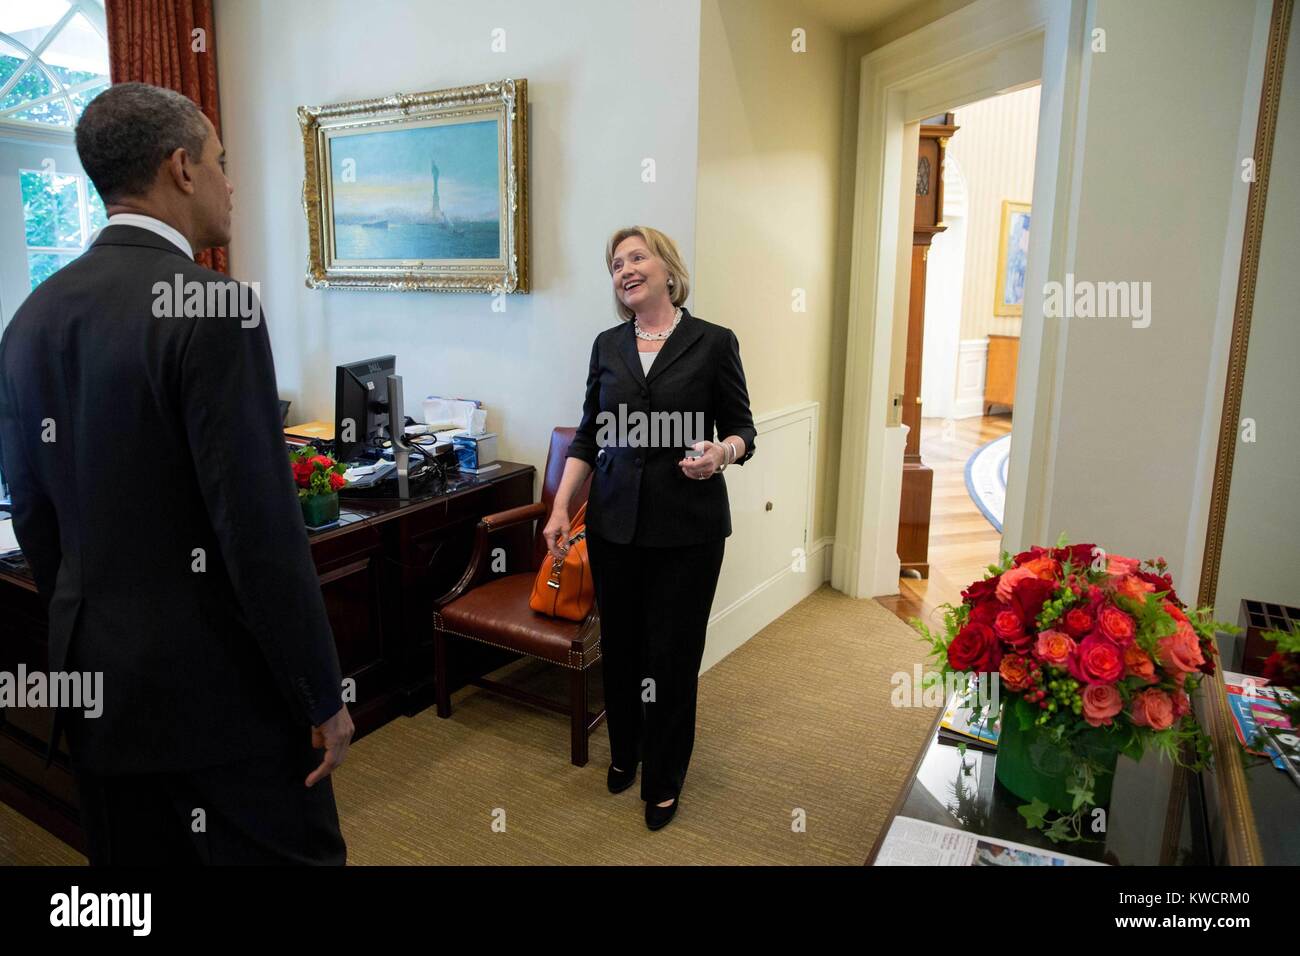 Us-Präsident Barack Obama begrüßt ehemalige Sec., Hillary Rodham Clinton in der äußeren Oval Office. Juli 29, 2013. (BSLOC 2015 3 72) Stockfoto